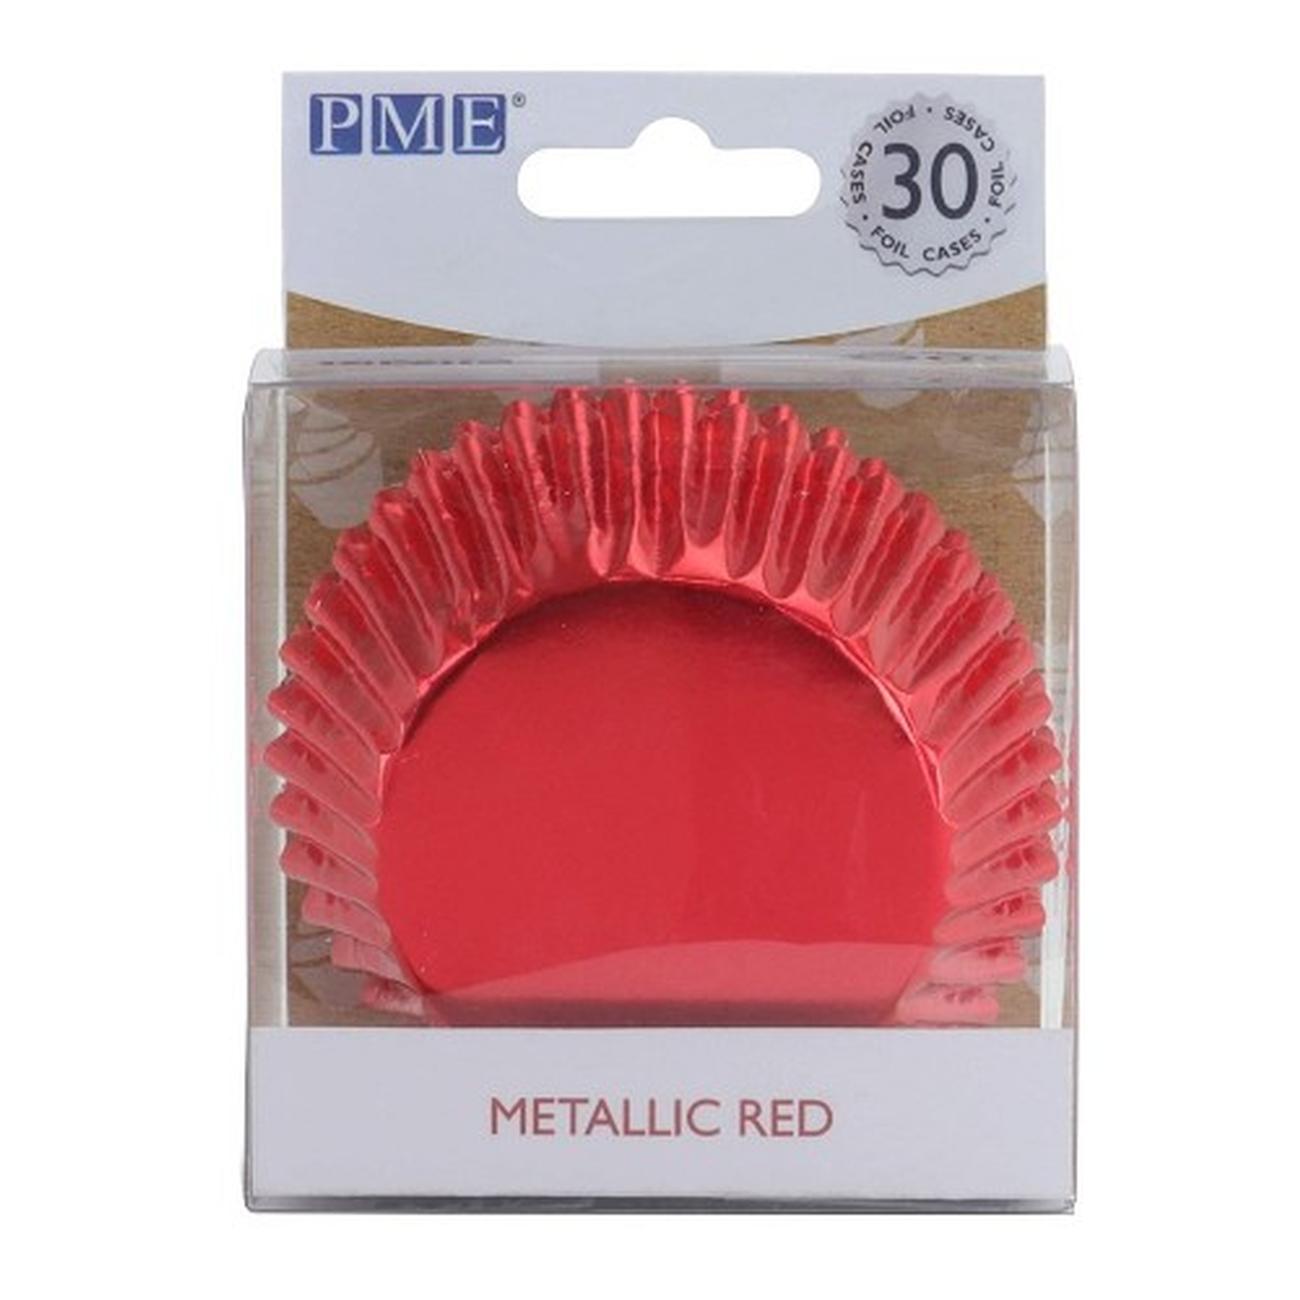 pme-30-metallic-red-foil-baking-cases - PME 30 Metallic Red Foil Baking Cases